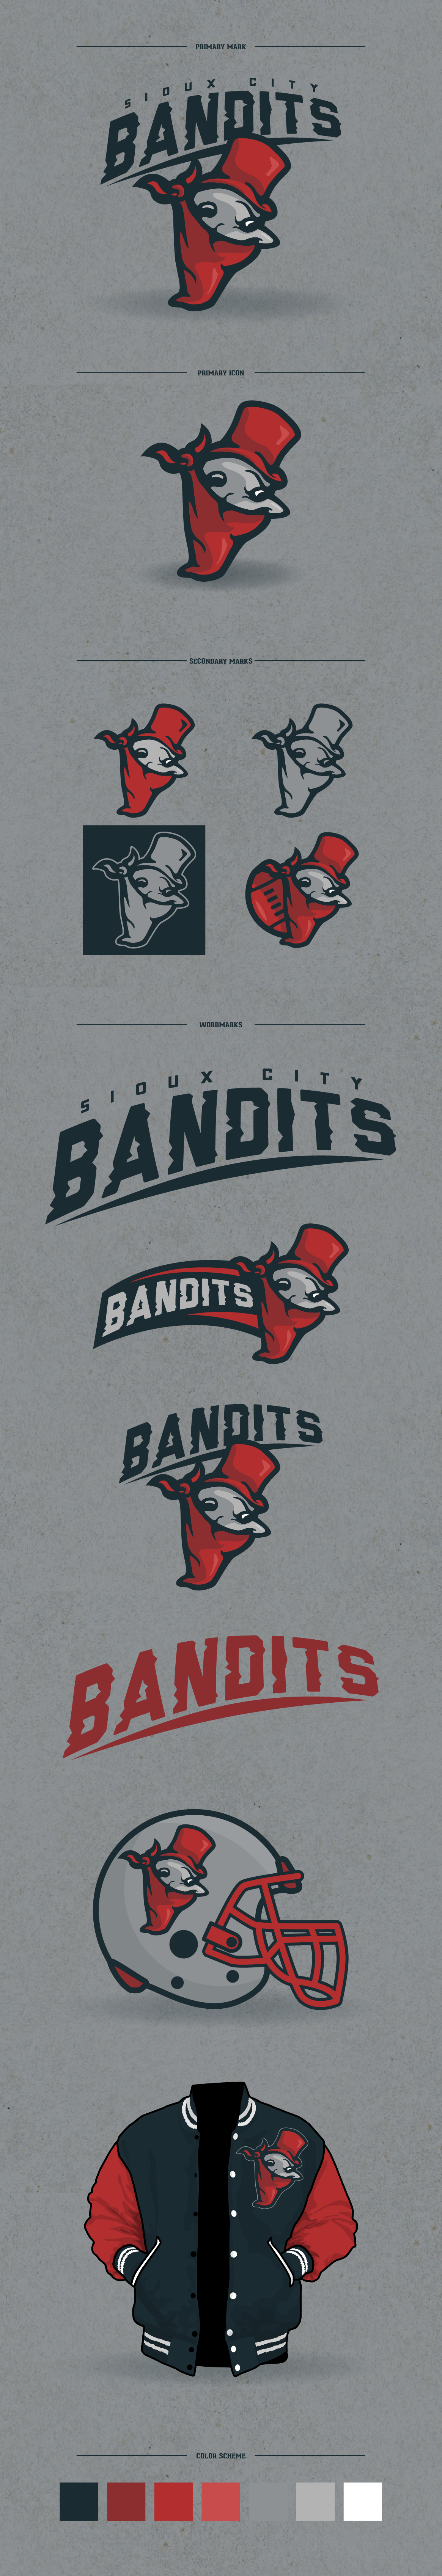 bandit logo Icon outlaw west wild west cowboy Sioux City hat Bandana